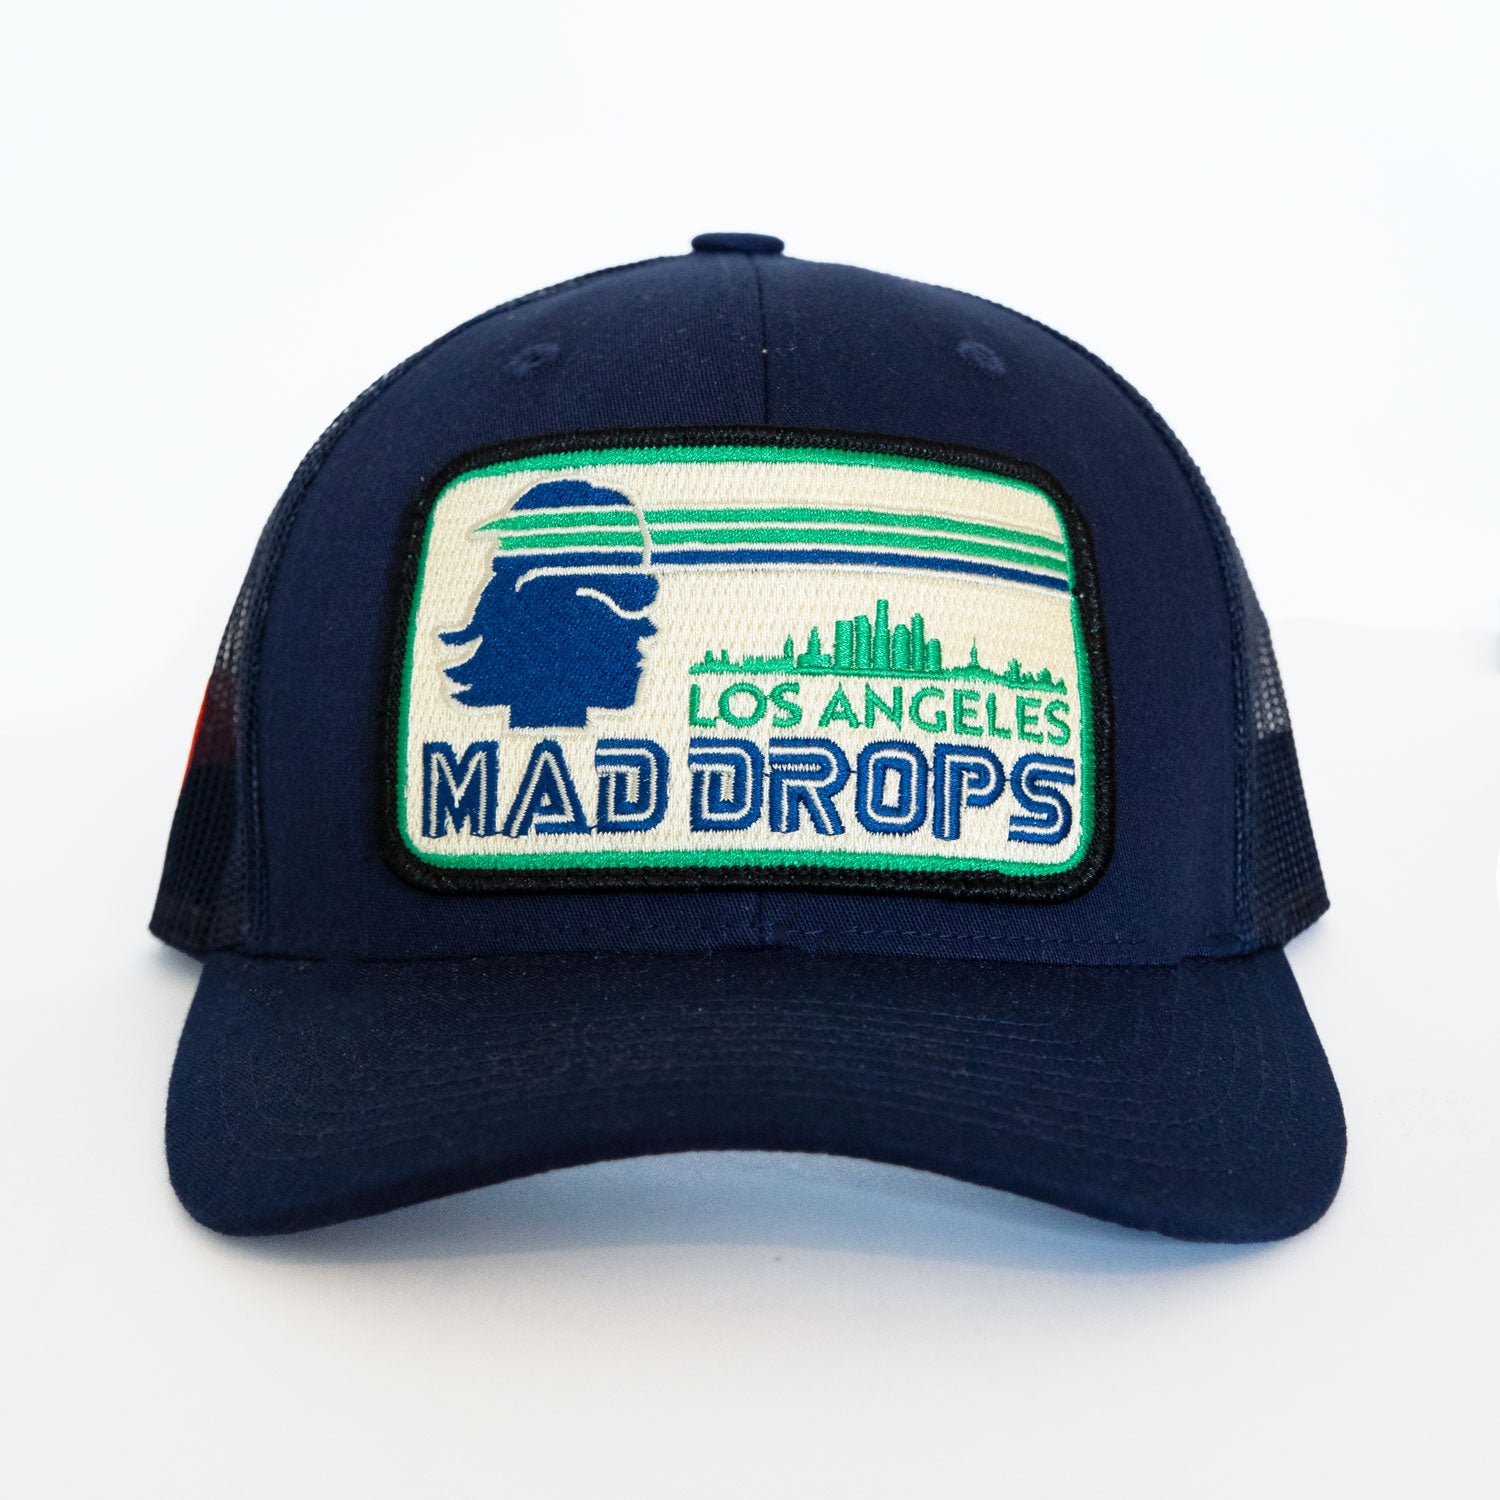 Bart Bridge X Mad Drops Trucker Patch Hat